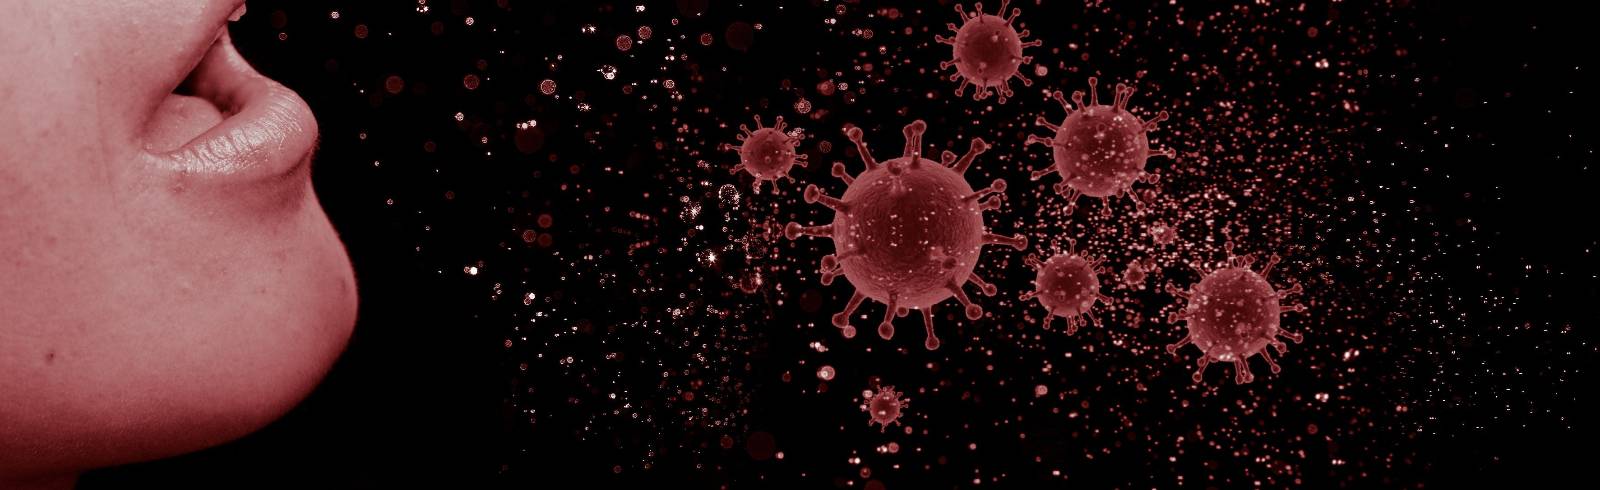 Grippesaison: Nächste könnte stark ausfallen